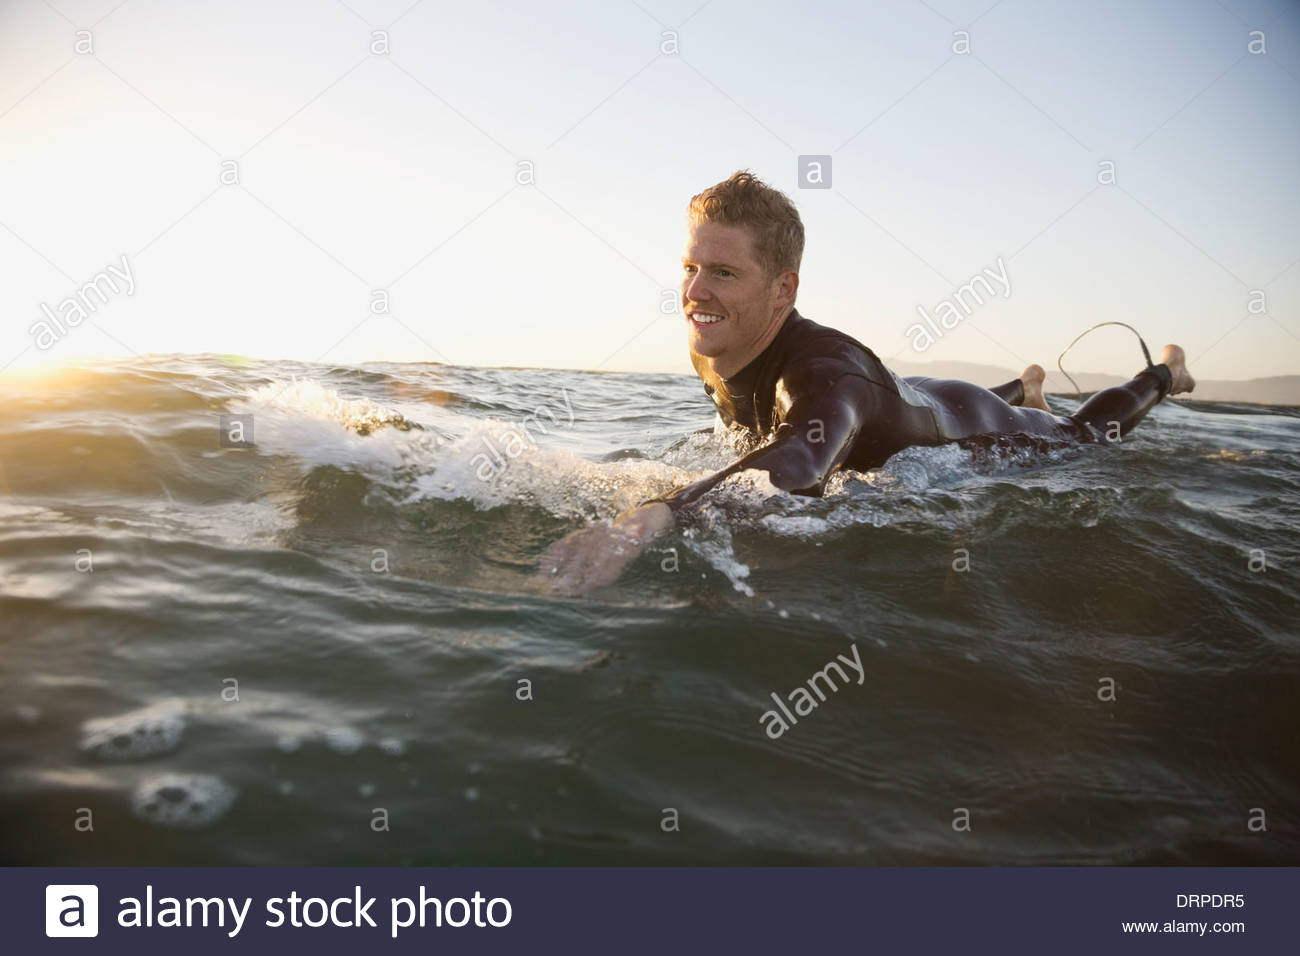 Man paddling on surfboard Banque D'Images